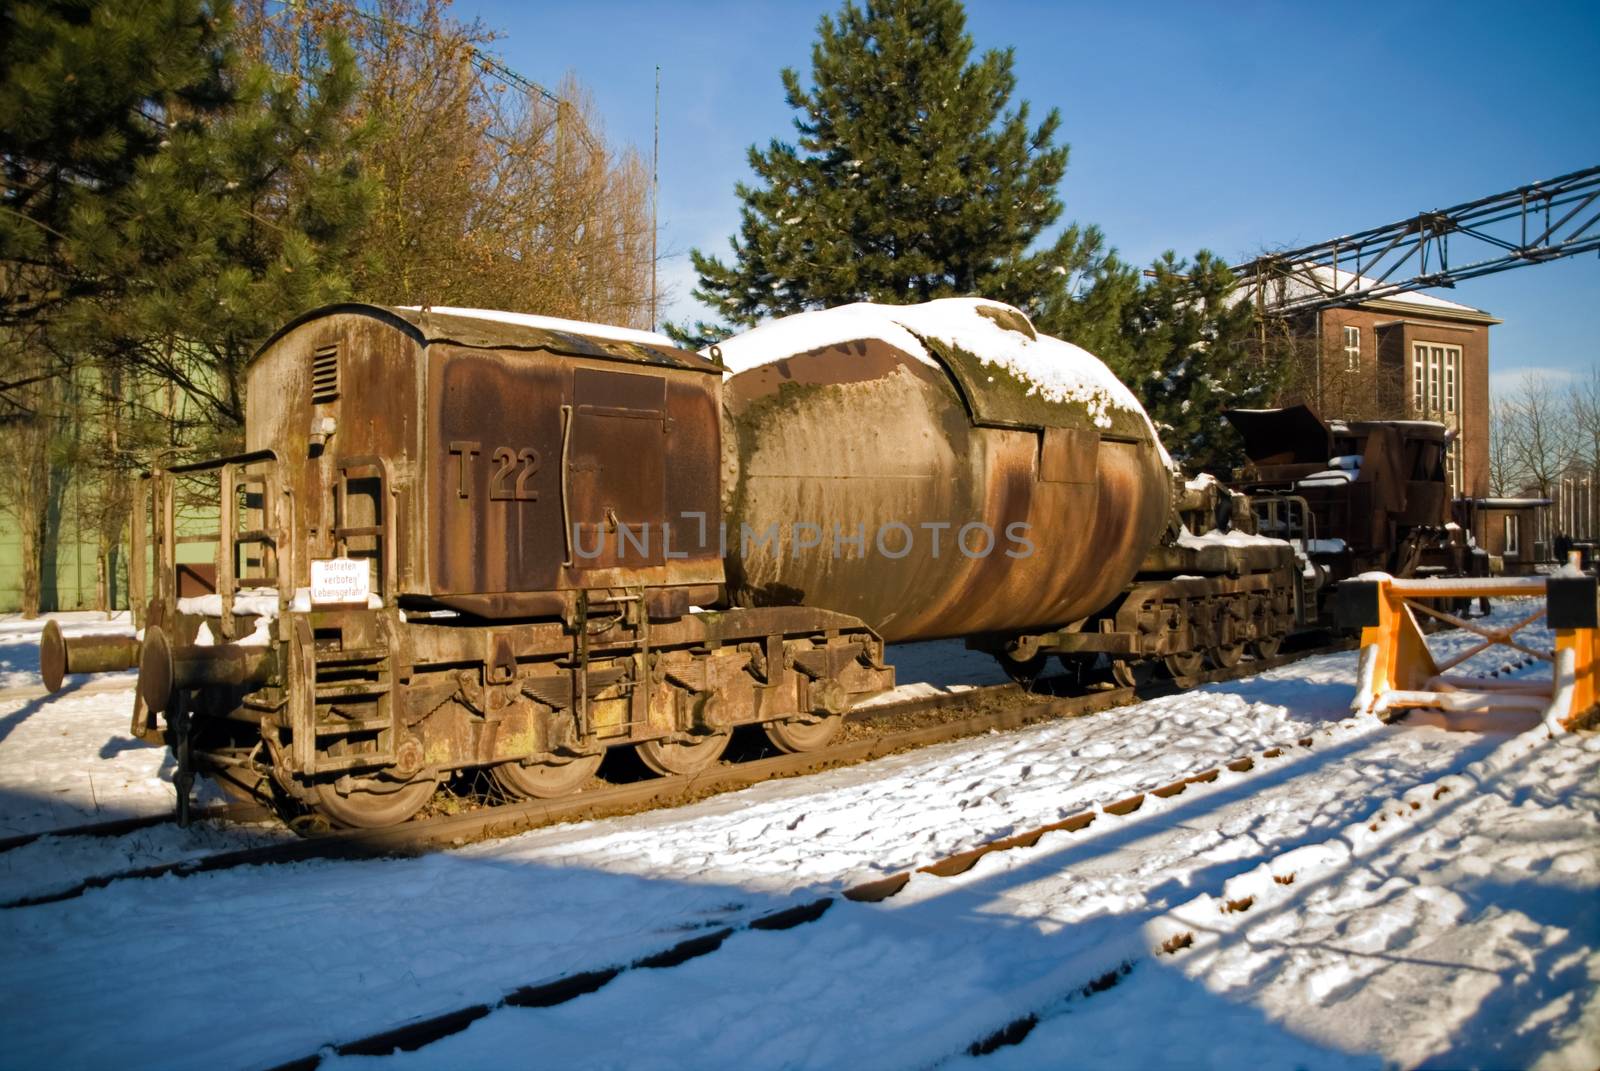 Industrial plant torpedo car train rail in winter snow ice steel rust